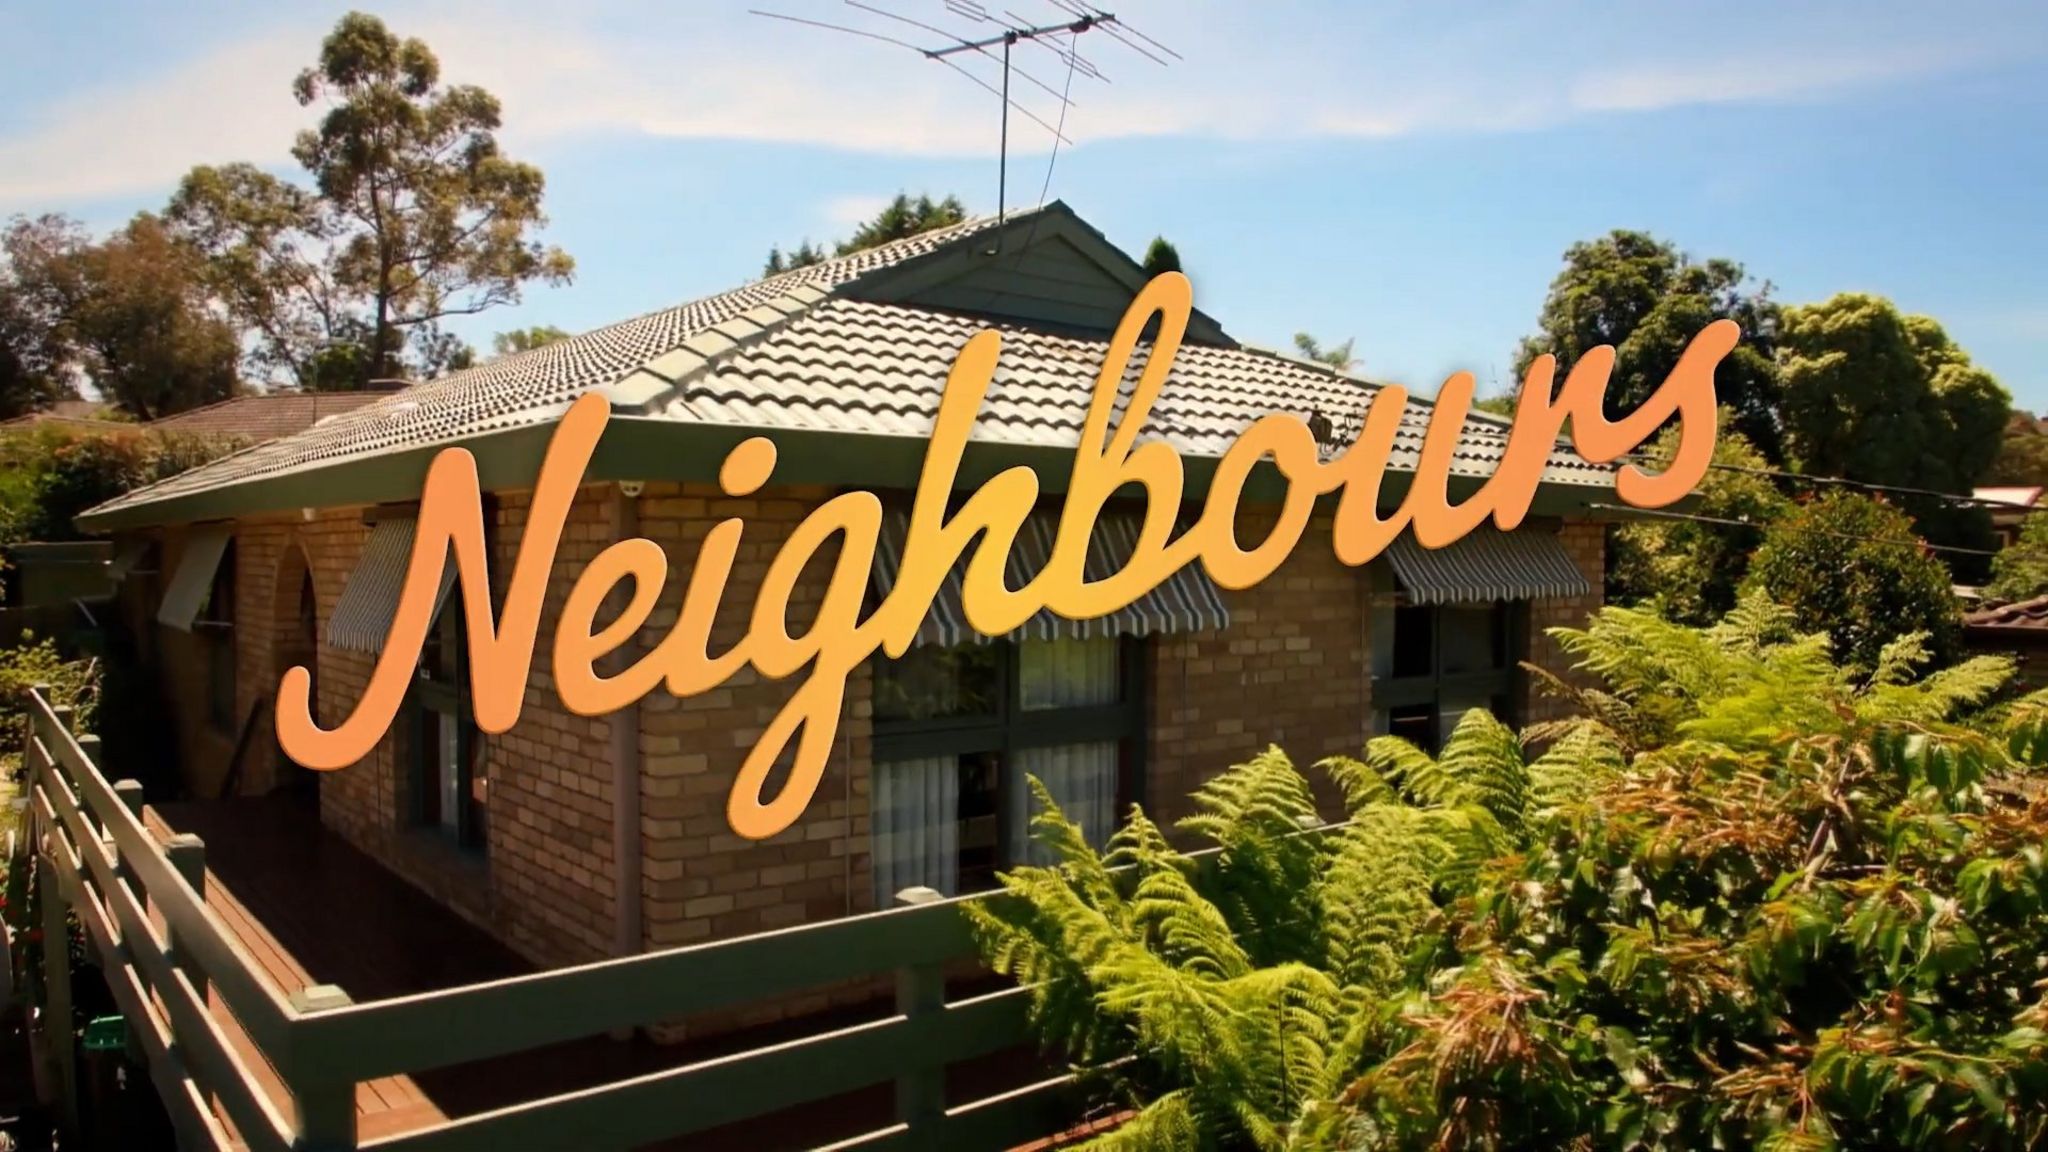 The Neighbours logo